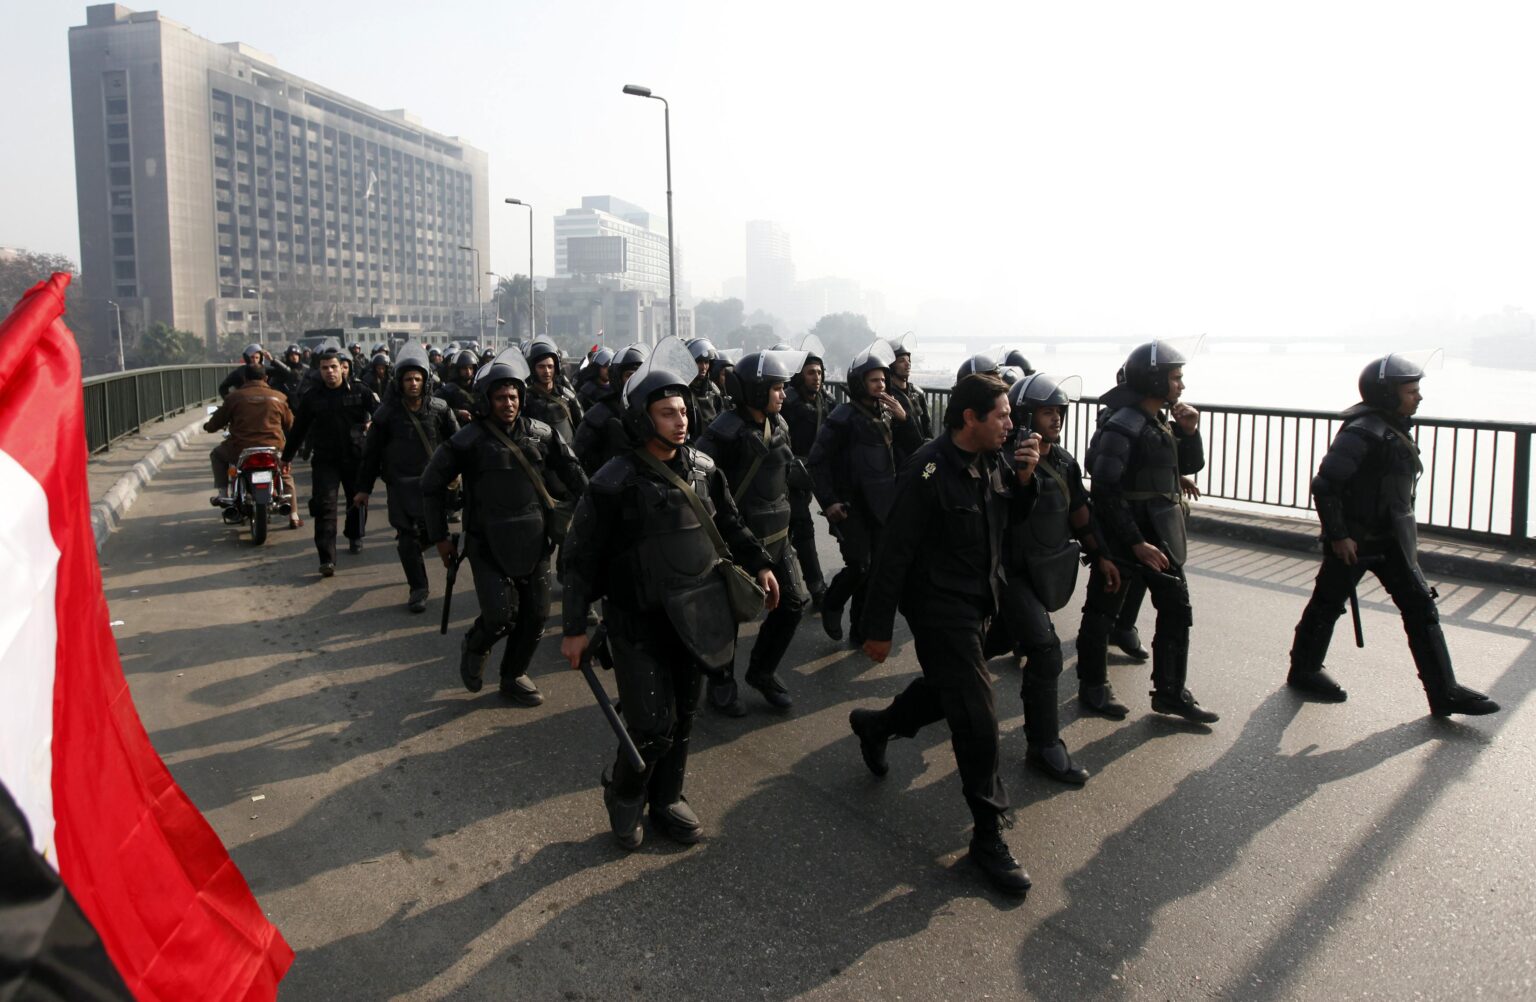 egypt-police